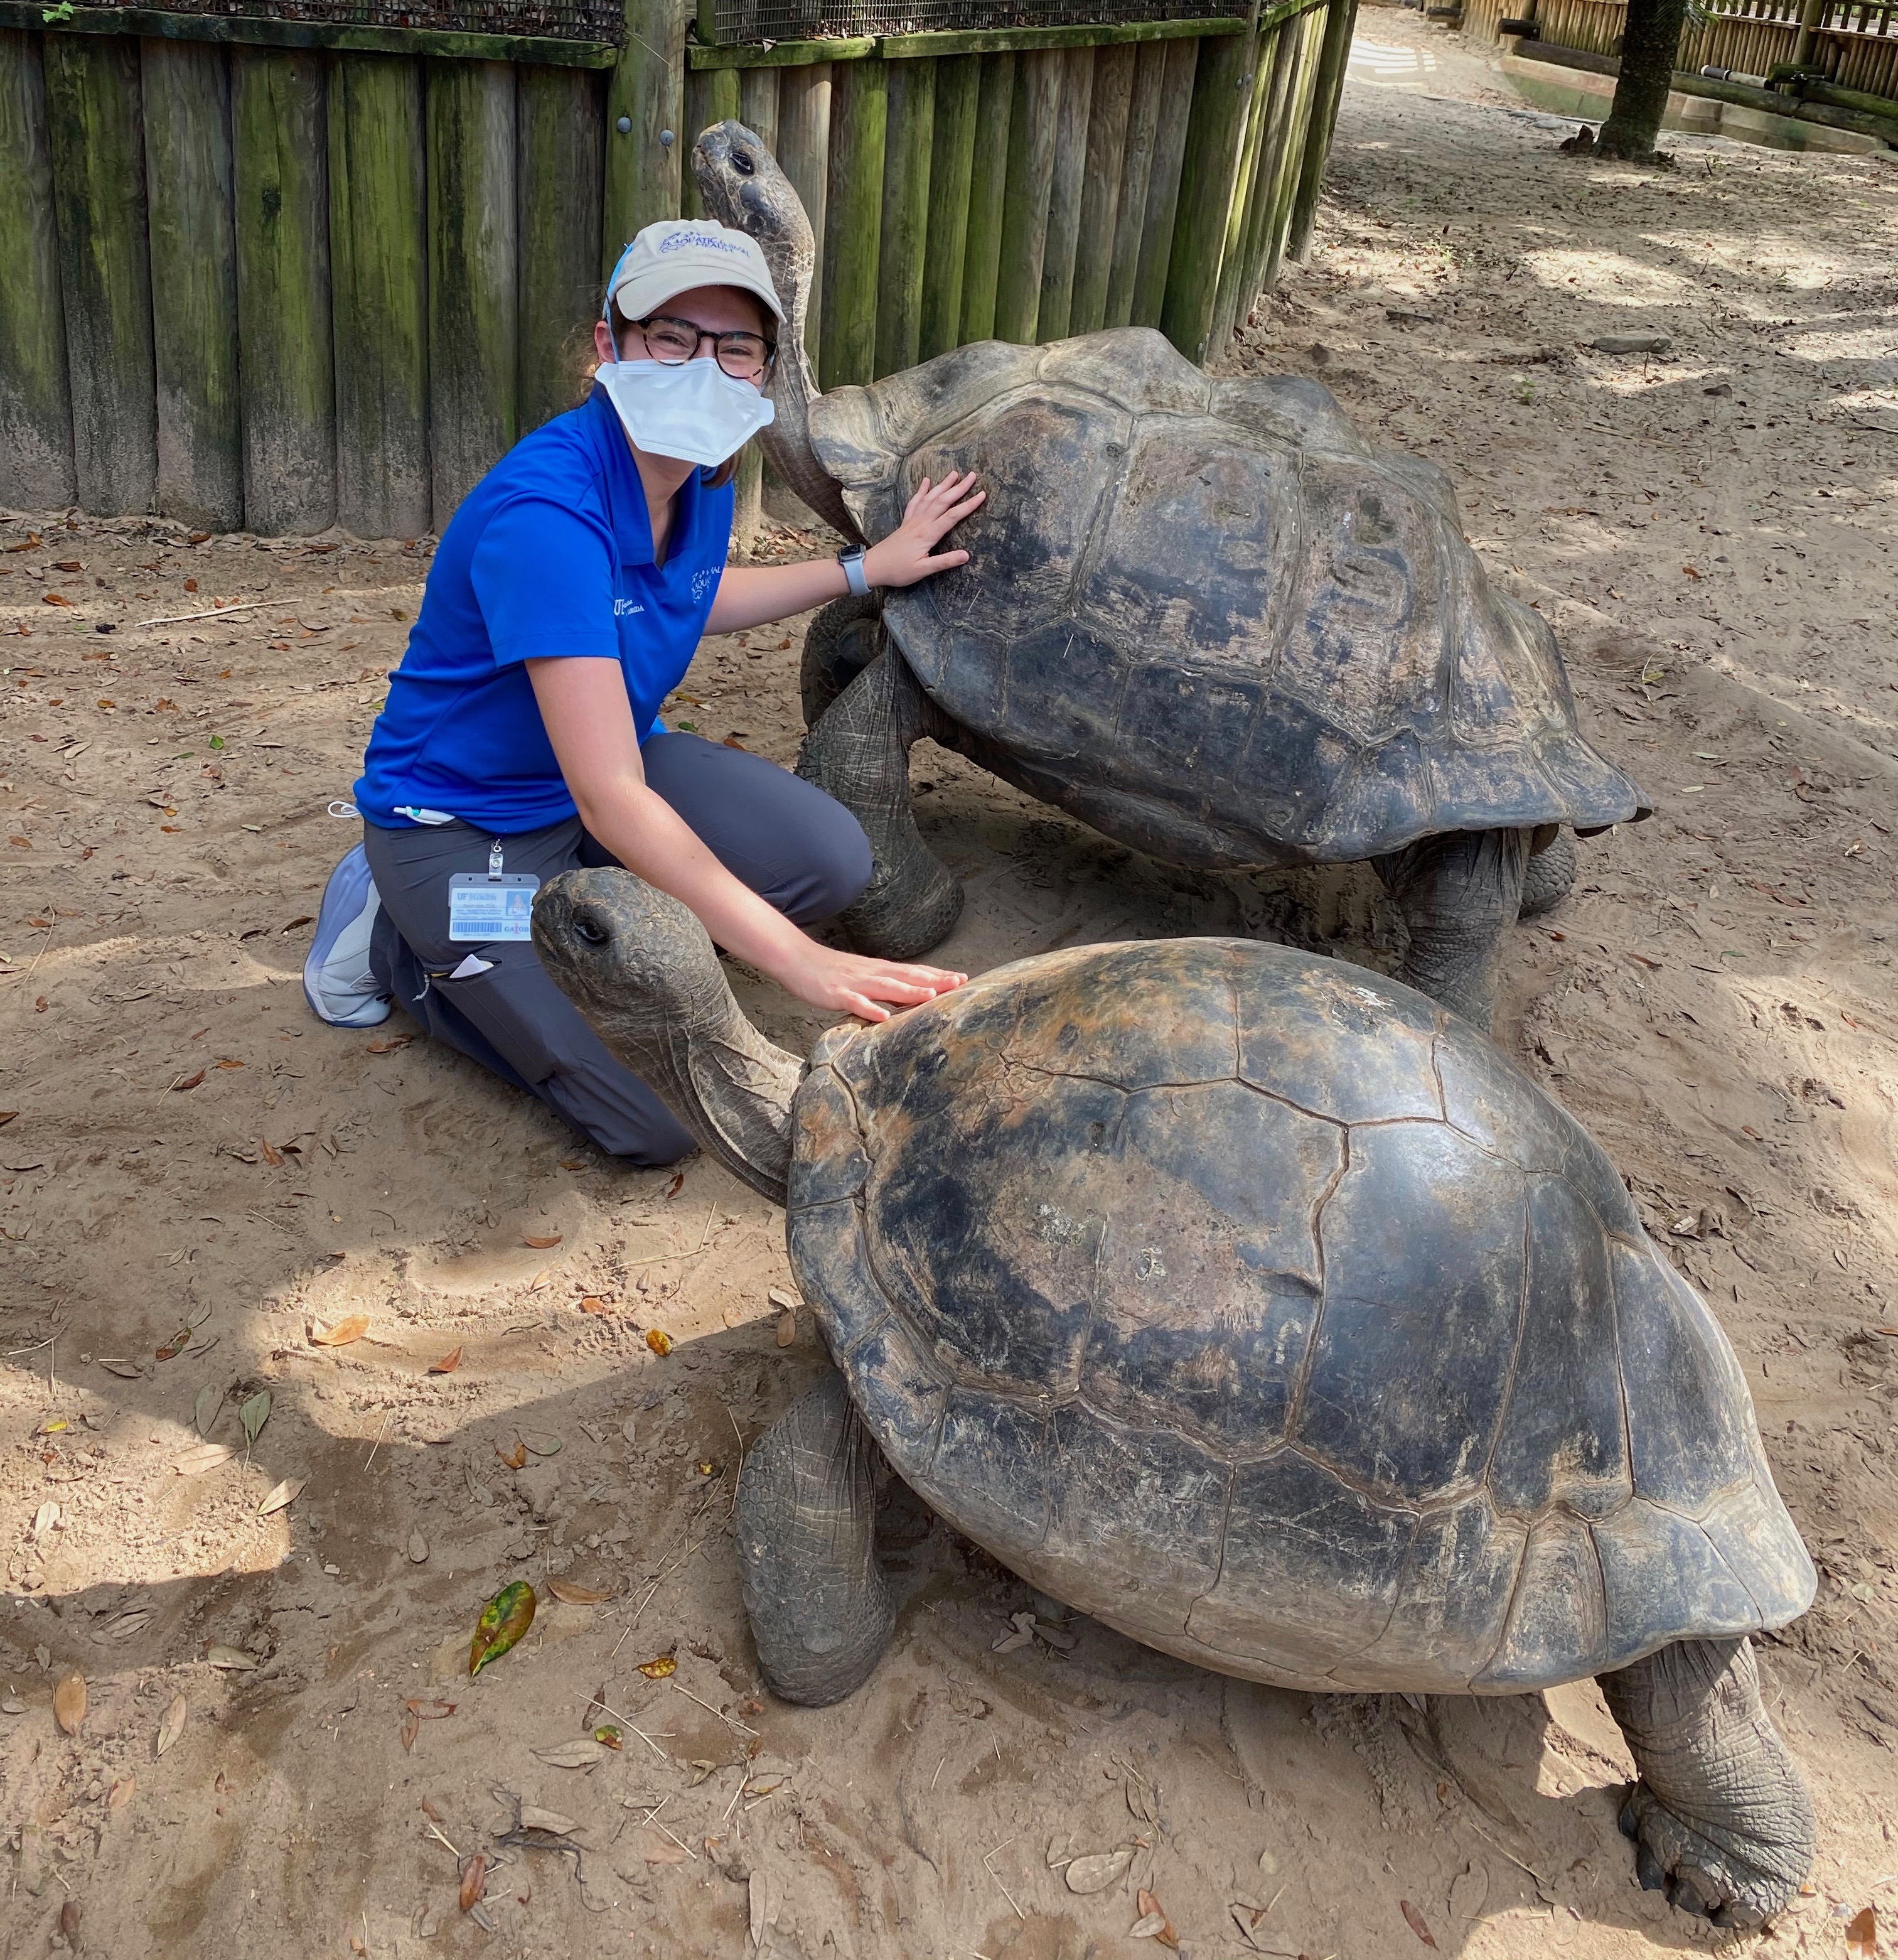 Sarah Balik shown with two tortoises